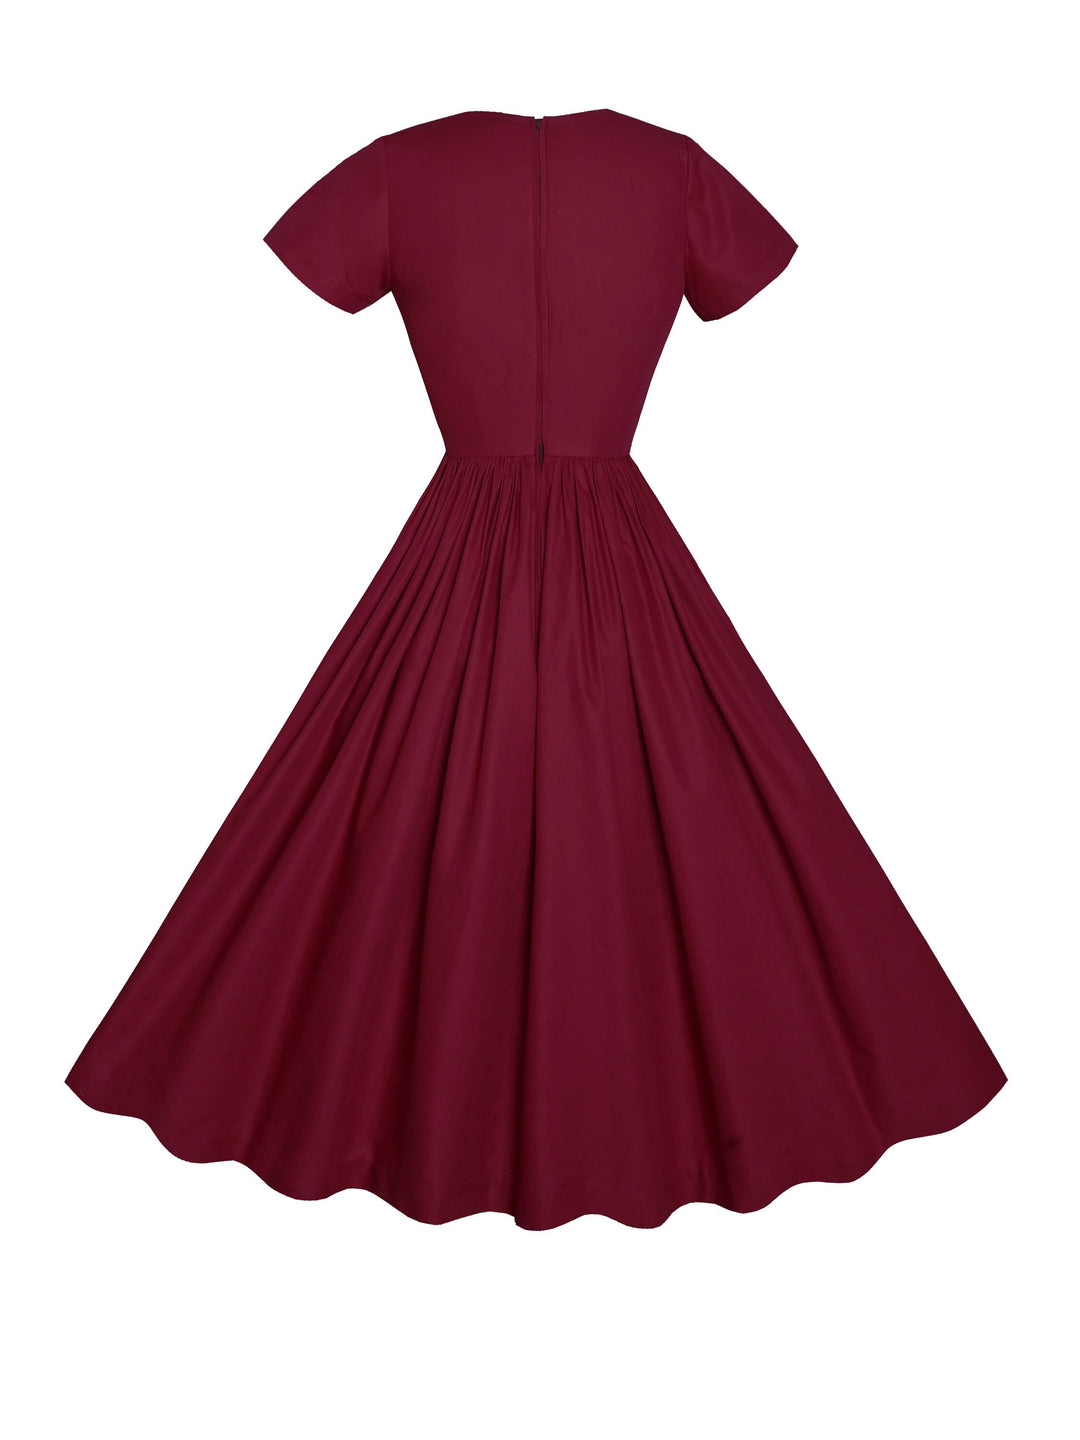 MTO - Dorothy Dress in Burgundy Cotton